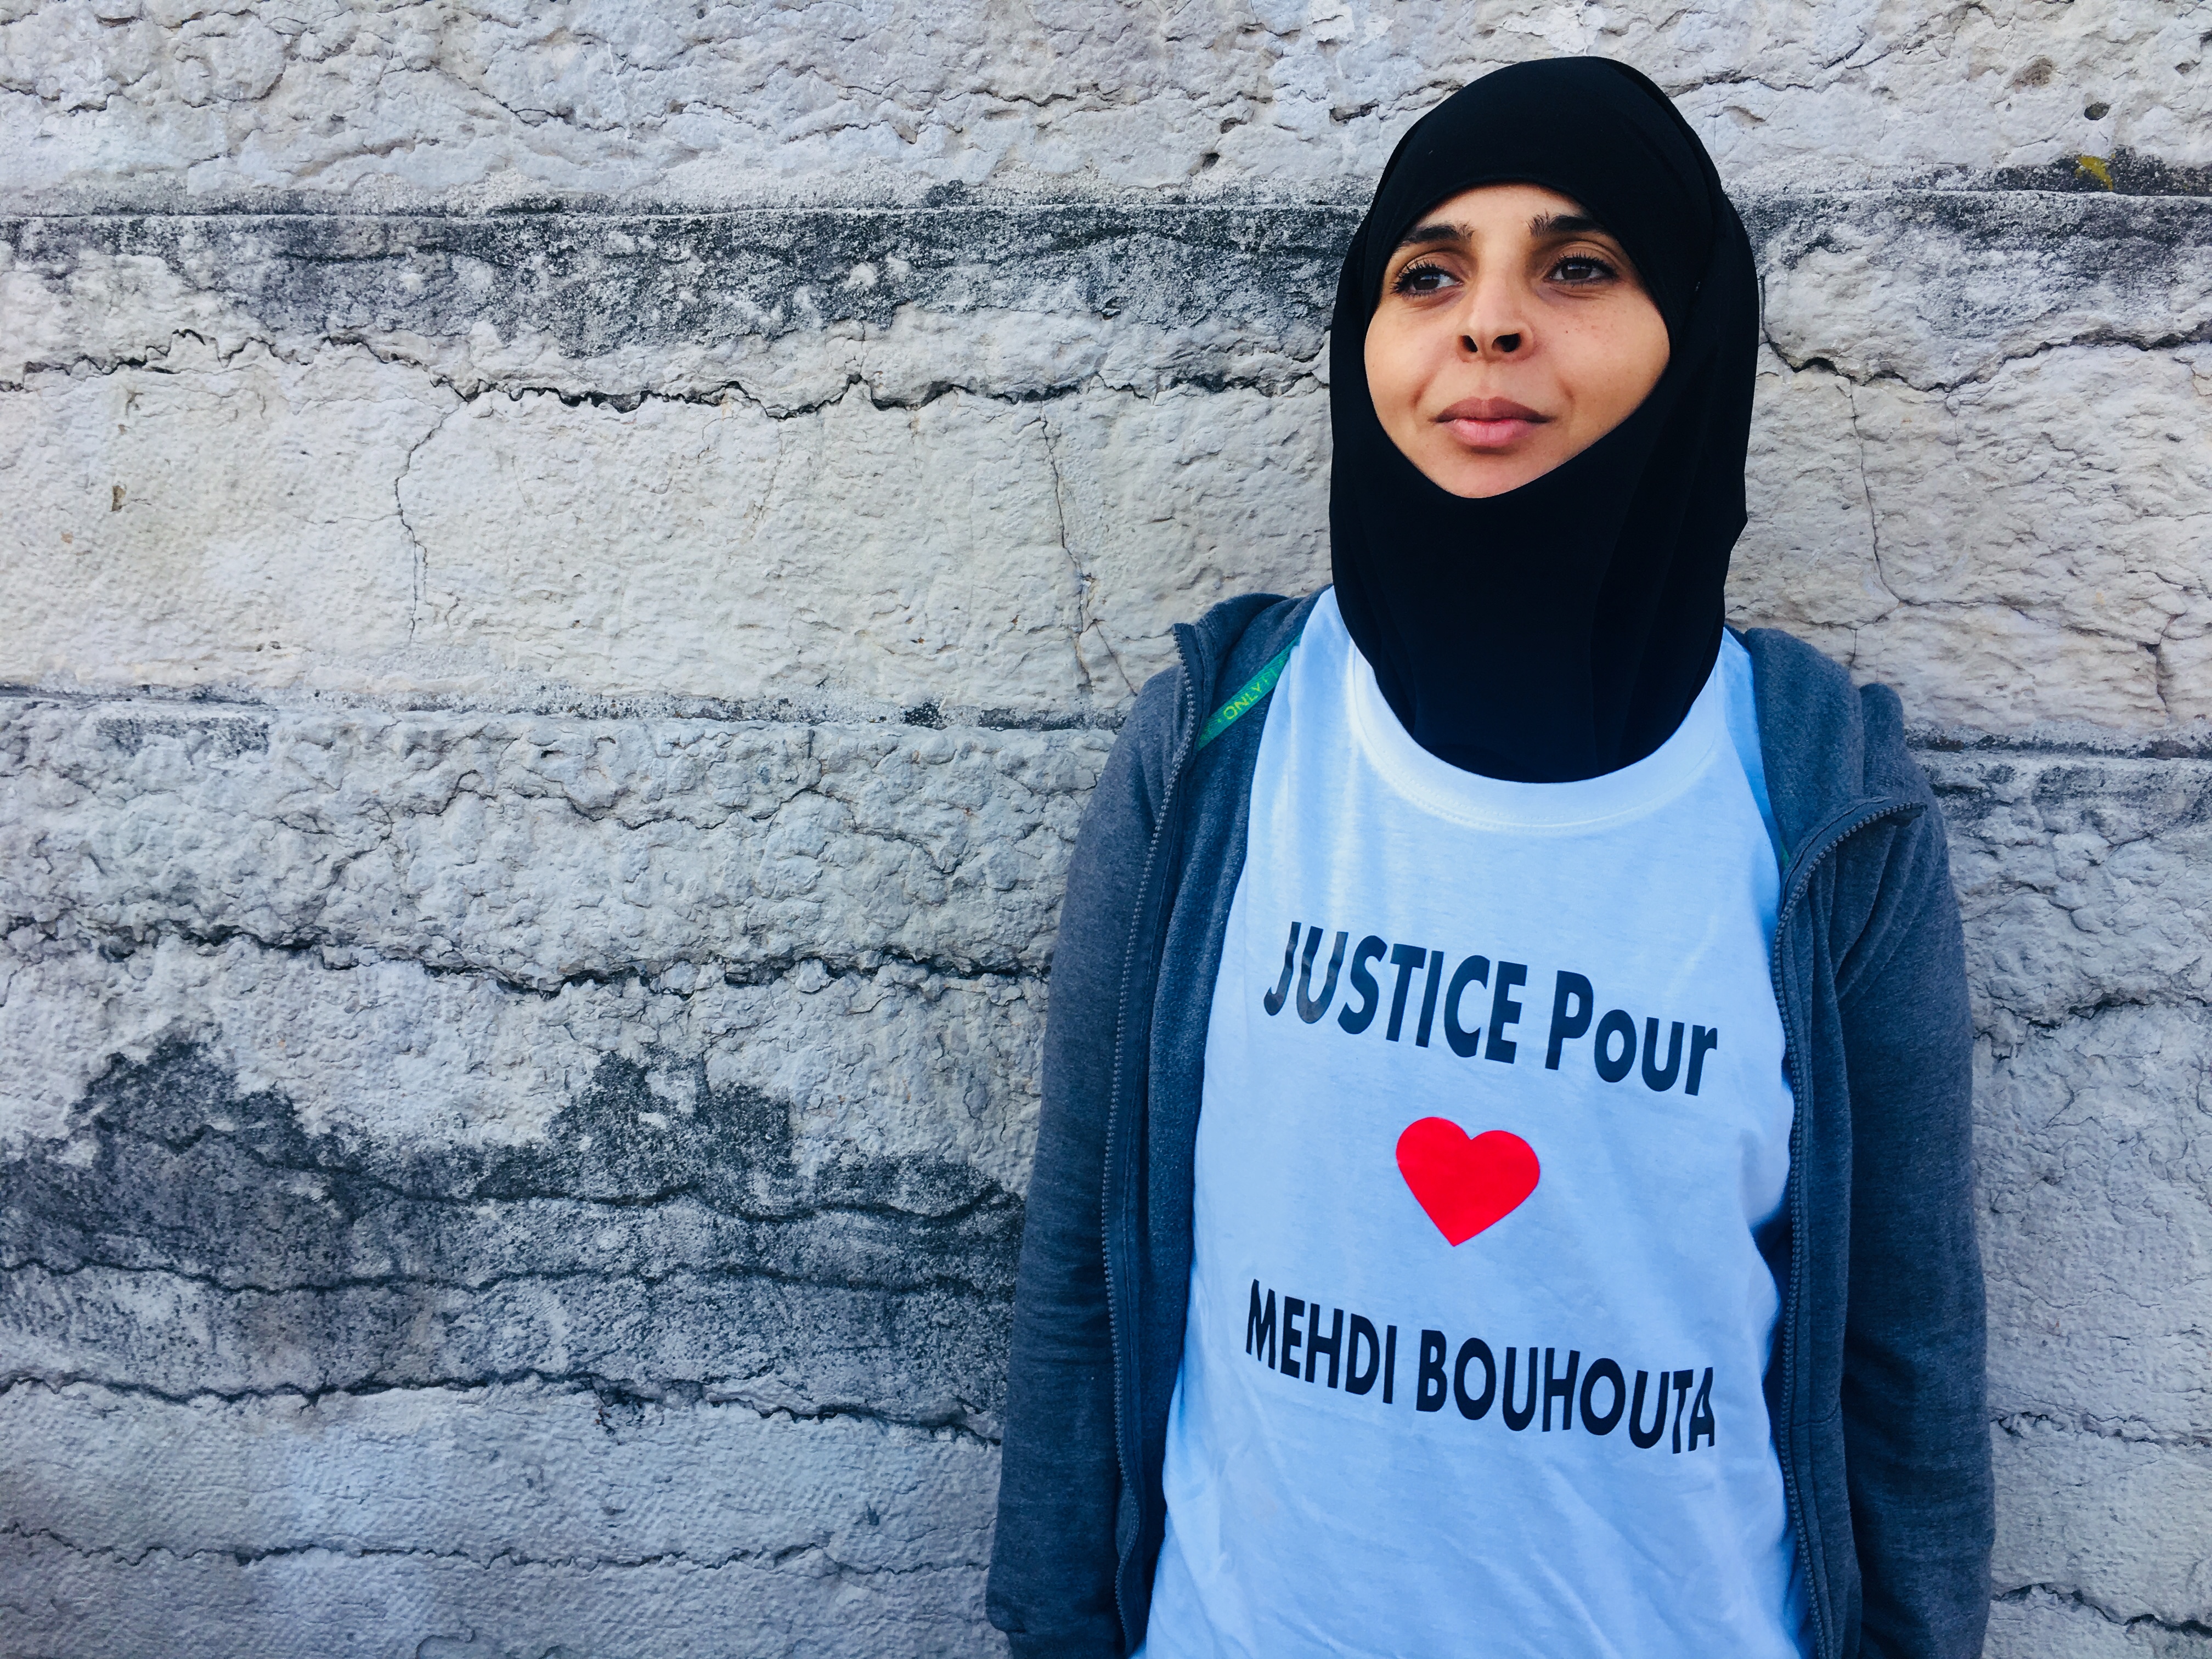 La soeur de Mehdi Bouhouta, organisatrice de la manifestation. Crédits Marta Sobkow